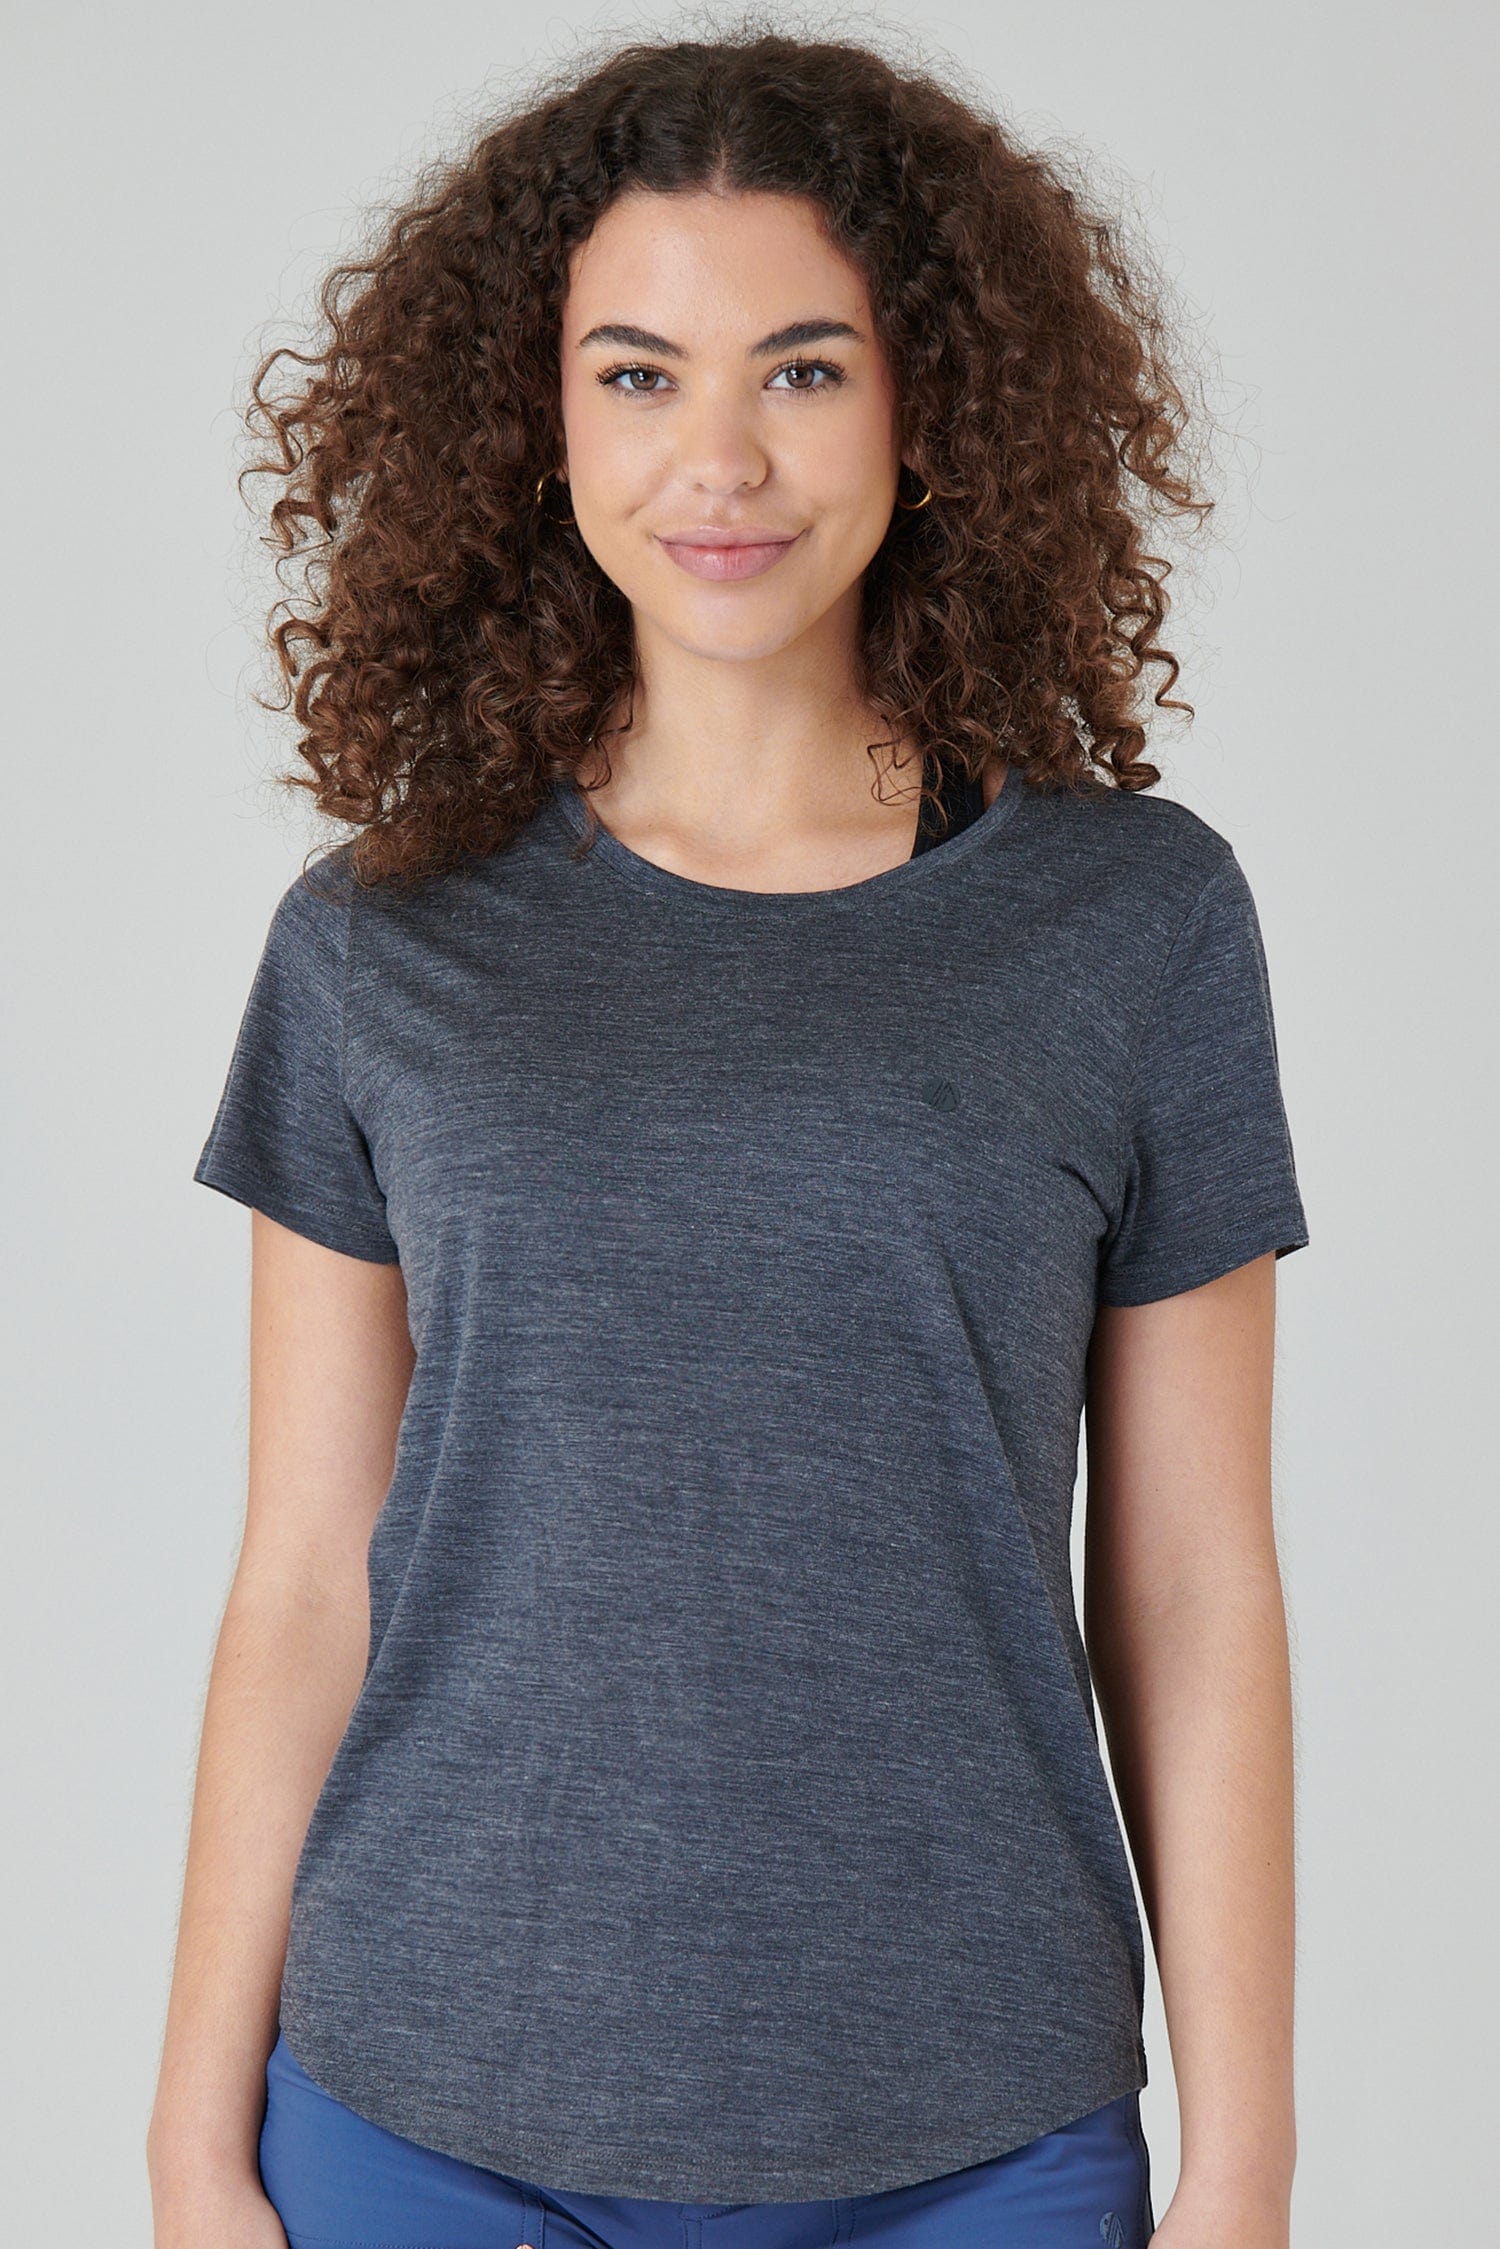 Merino Wool Crew Neck T-shirt - Charcoal - Xsmall / Uk8 - Womens - Acai Outdoorwear